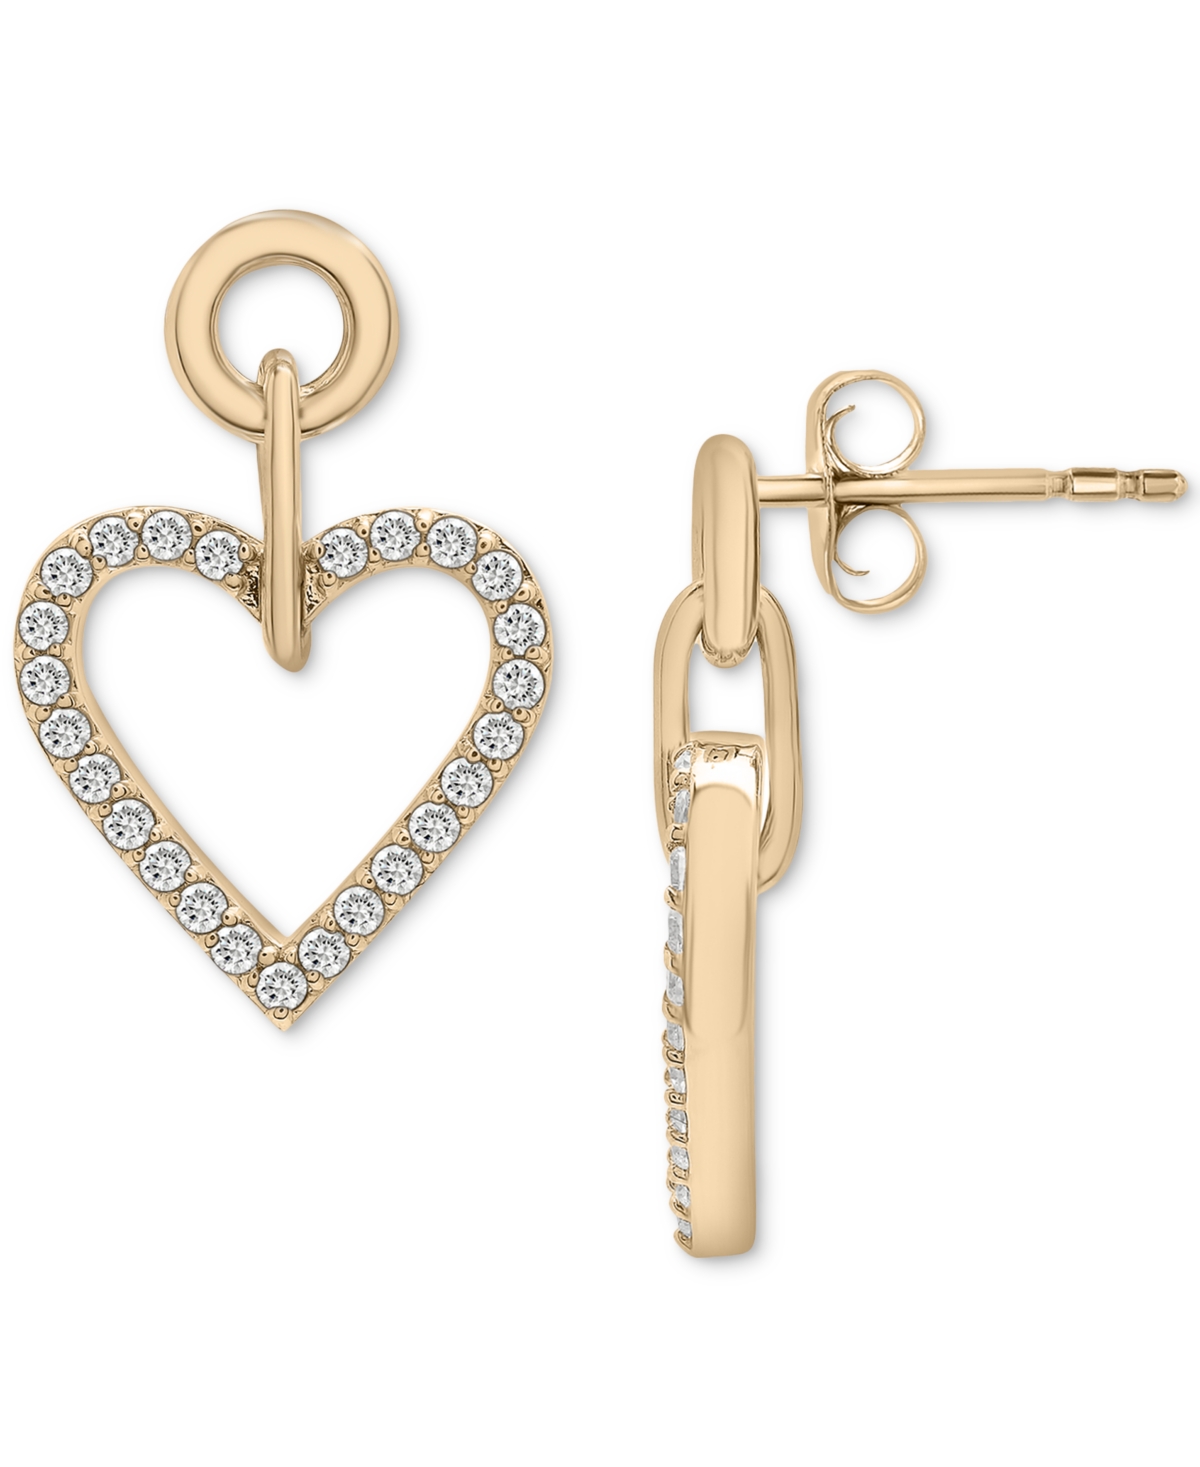 Diamond Heart Drop Earrings (1/2 ct. t.w.) in 14k Gold, Created for Macy's - Yellow Gold